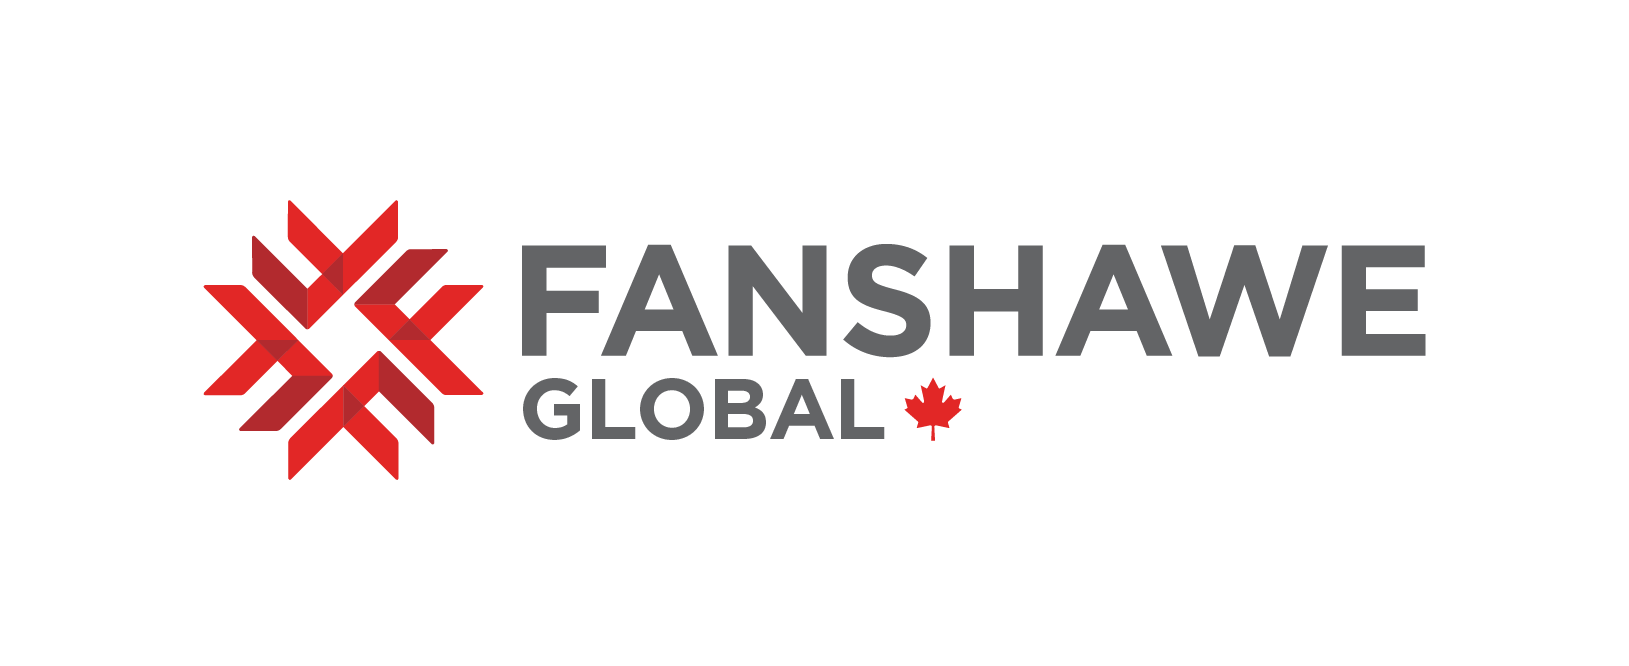 FANSHAWE GLOBAL